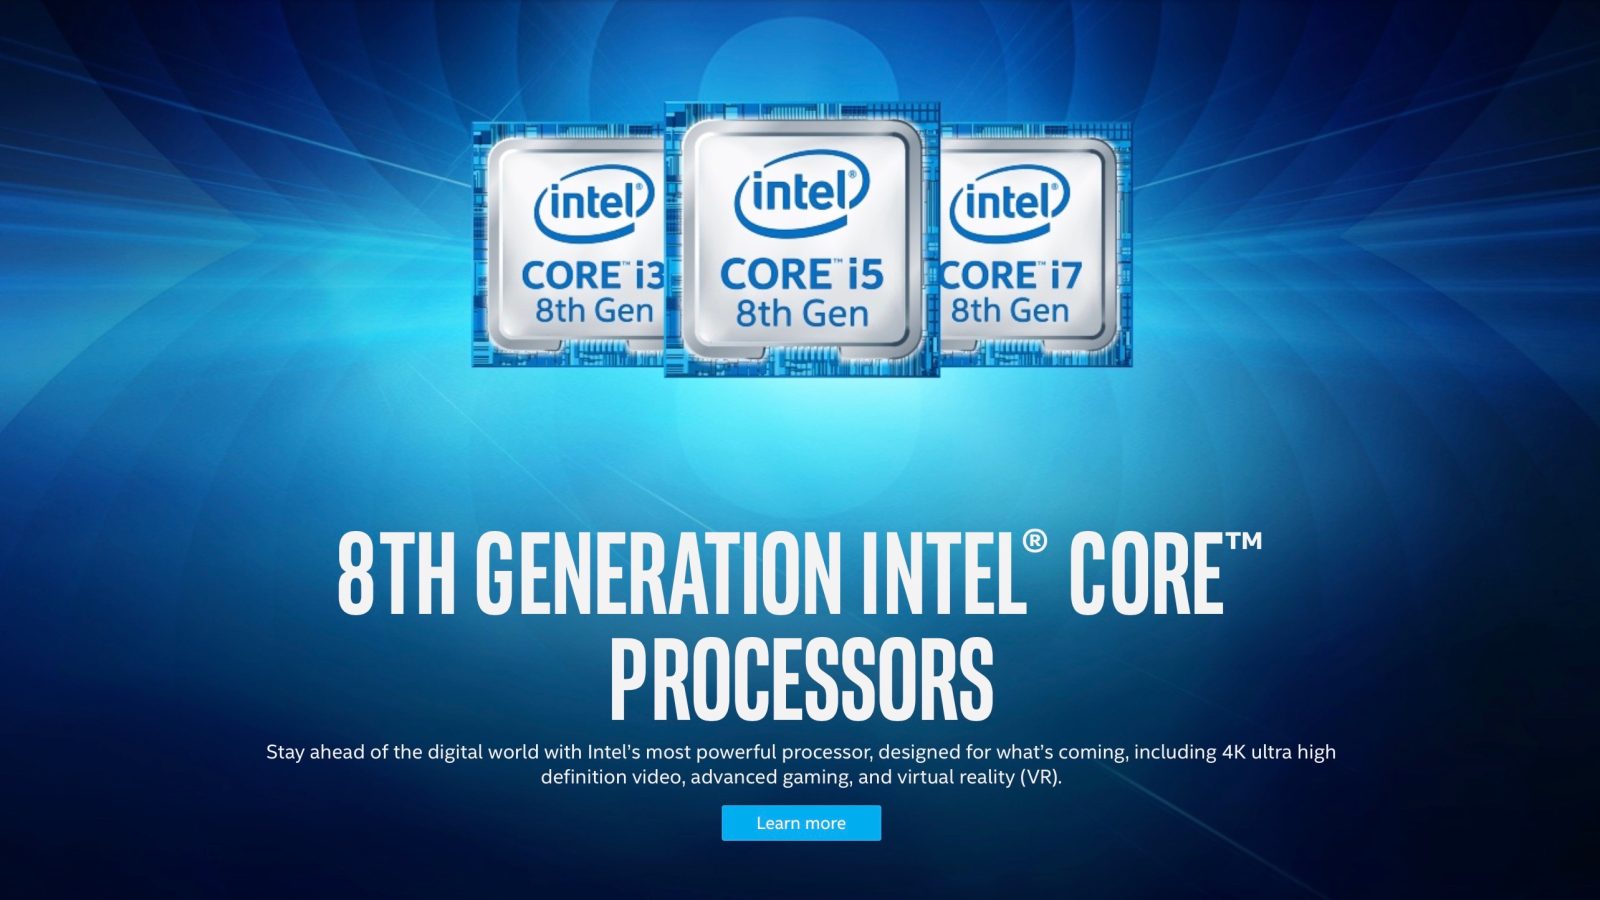 Intel оф сайт. Intel Core 8th Gen. Intel Core 5 8th Gen. Intel Core 8. Поколения процессоров Intel Core i5.